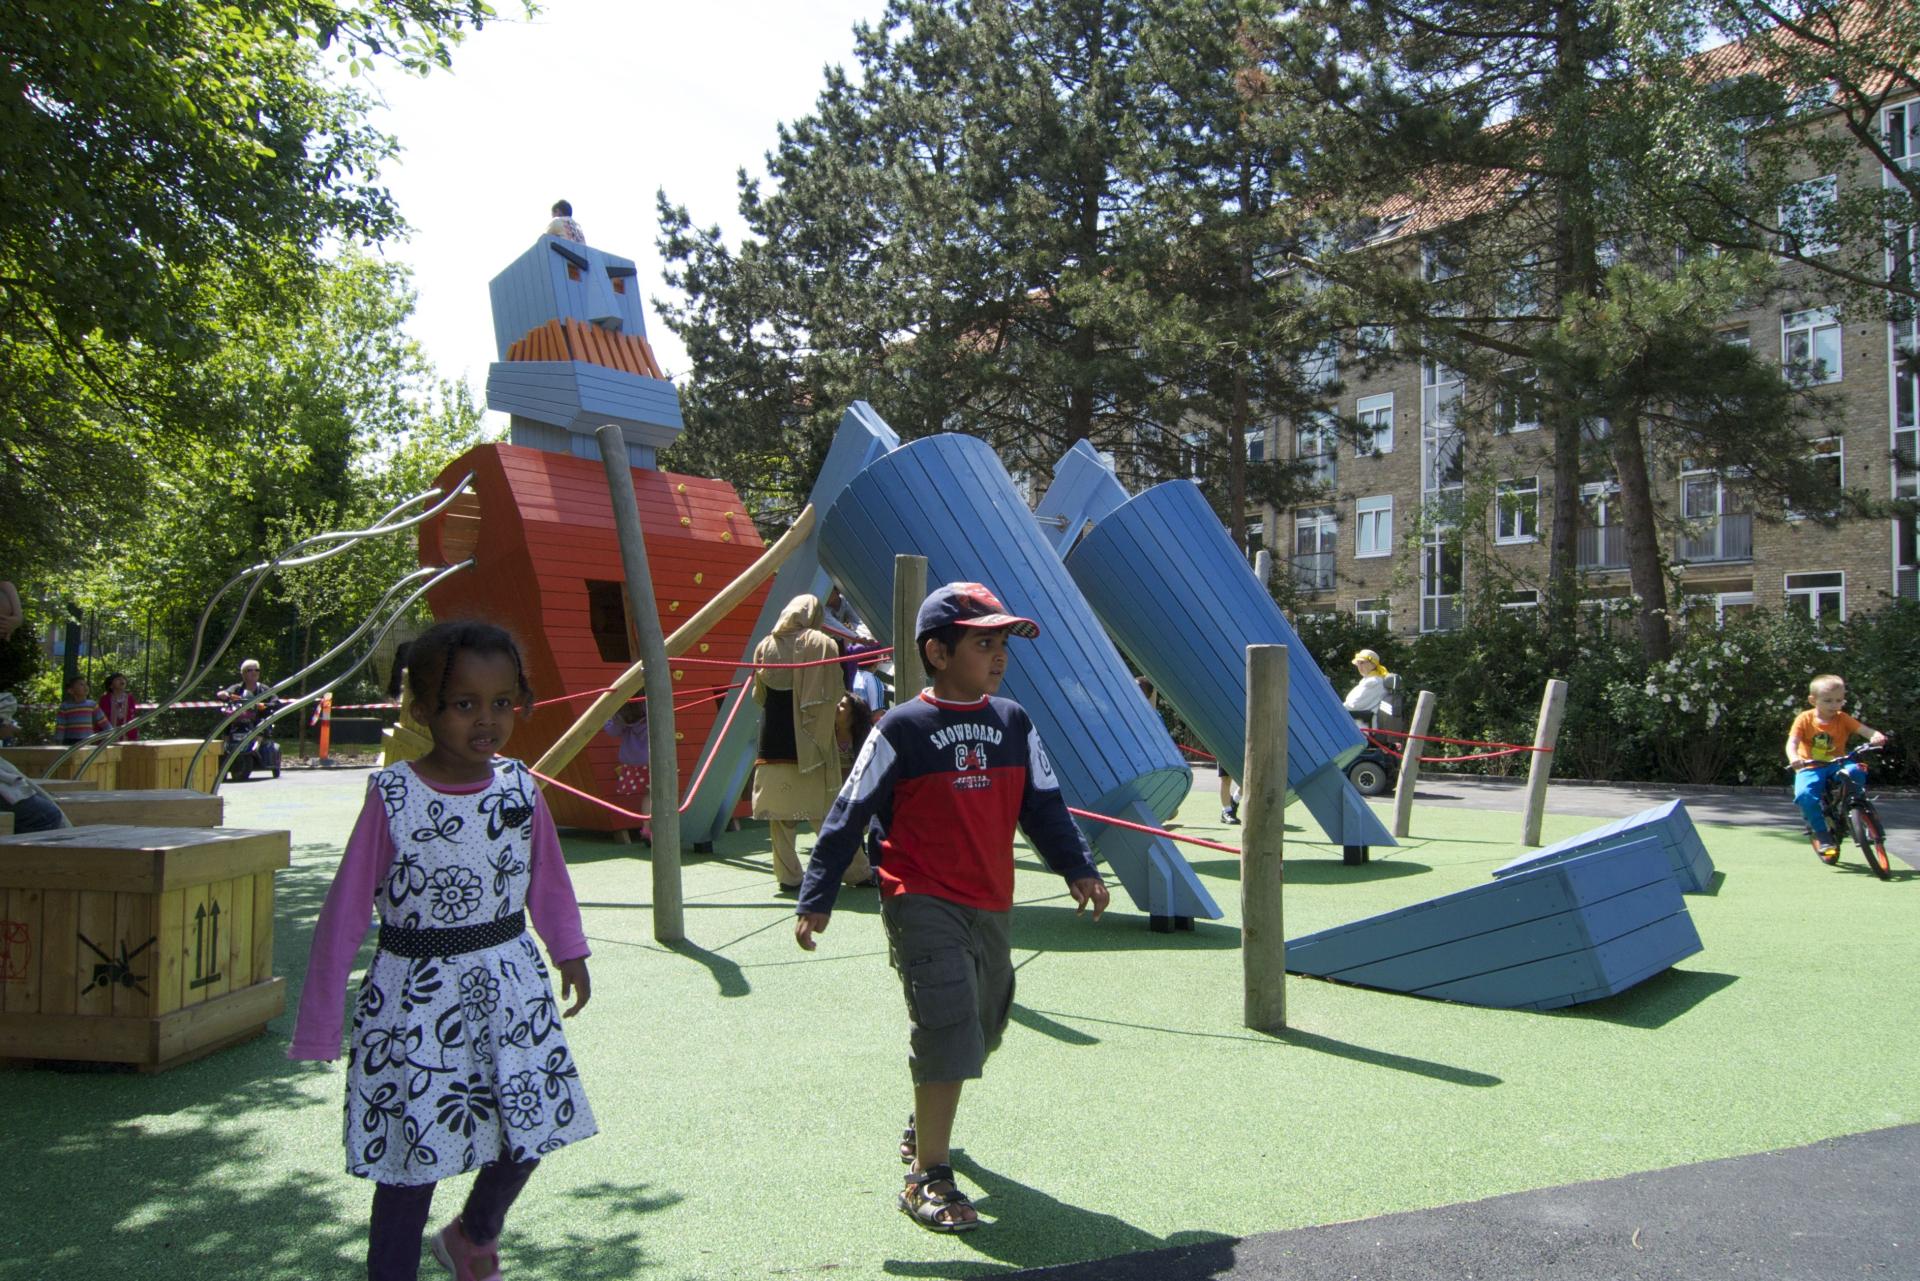 MONSTRUM playground monster design play legeplads